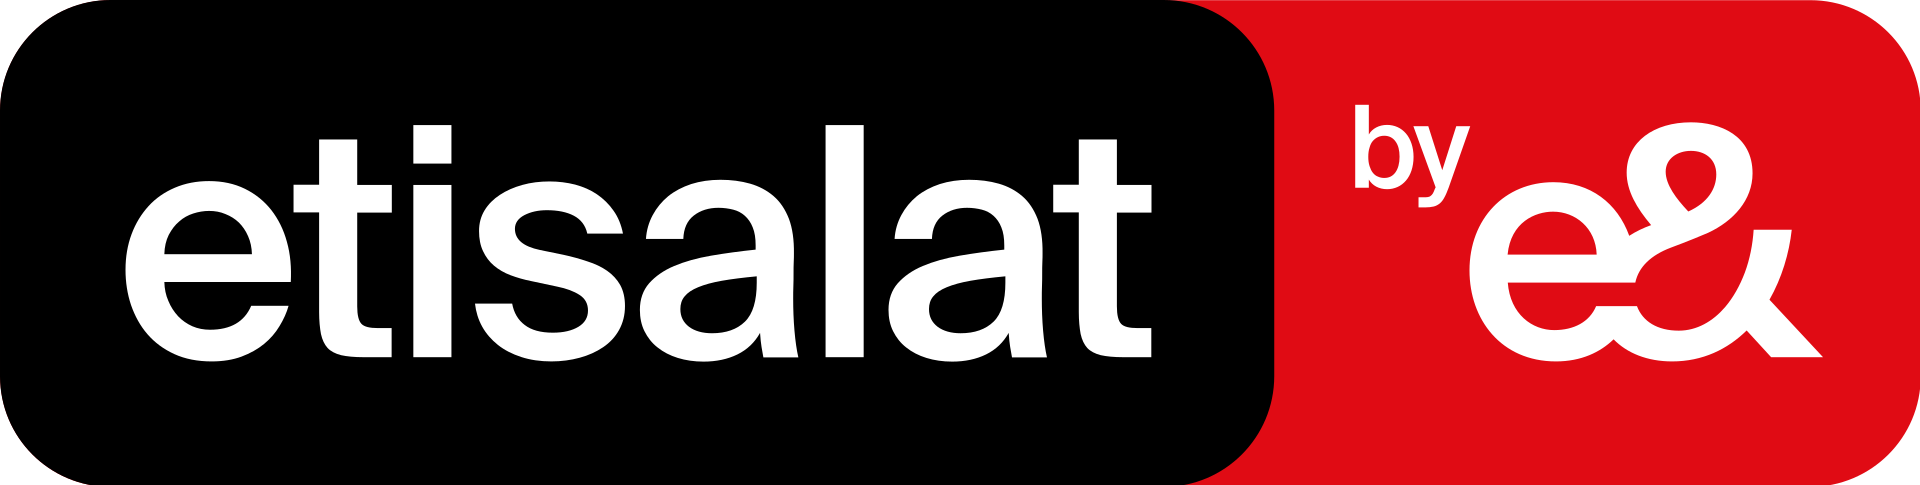 Etisalat by e& Brand Logo